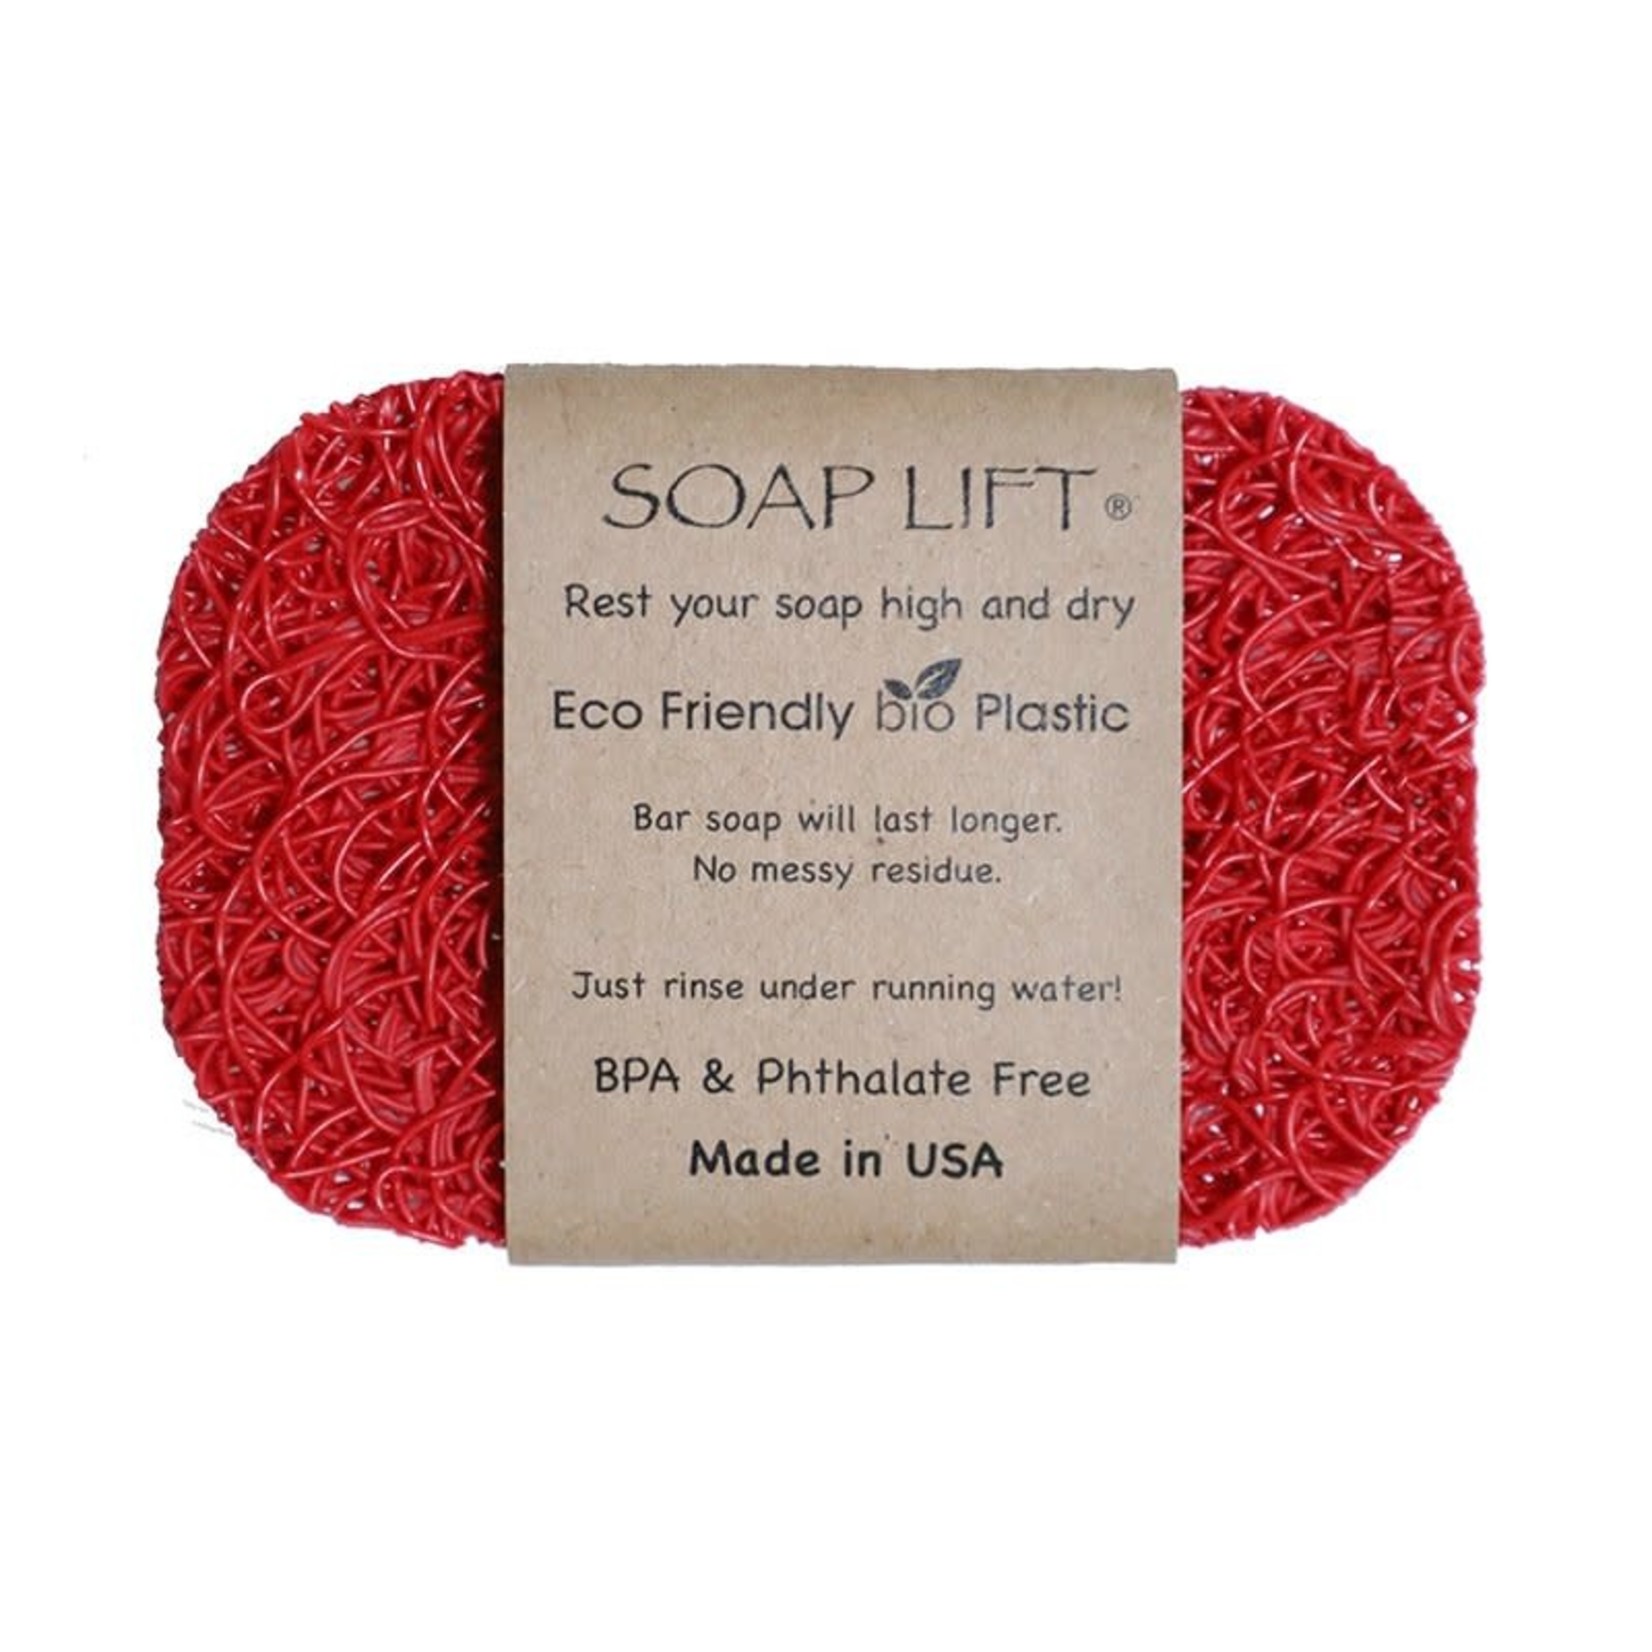 SOAPLIFT SOAP LIFT  - Red